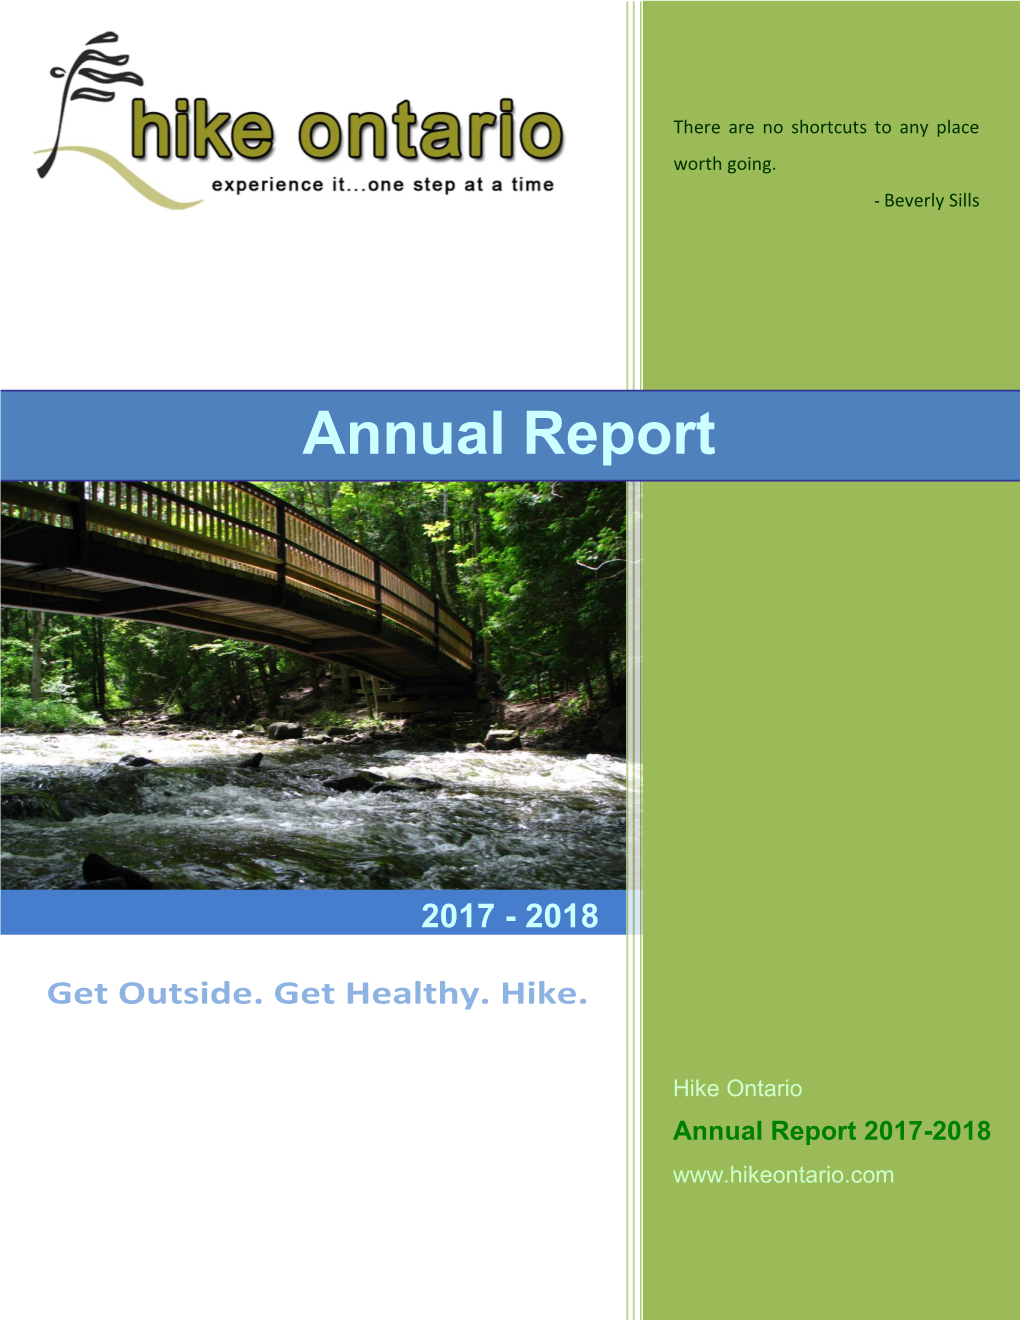 Hike Ontario 2017-2018 Annual Report